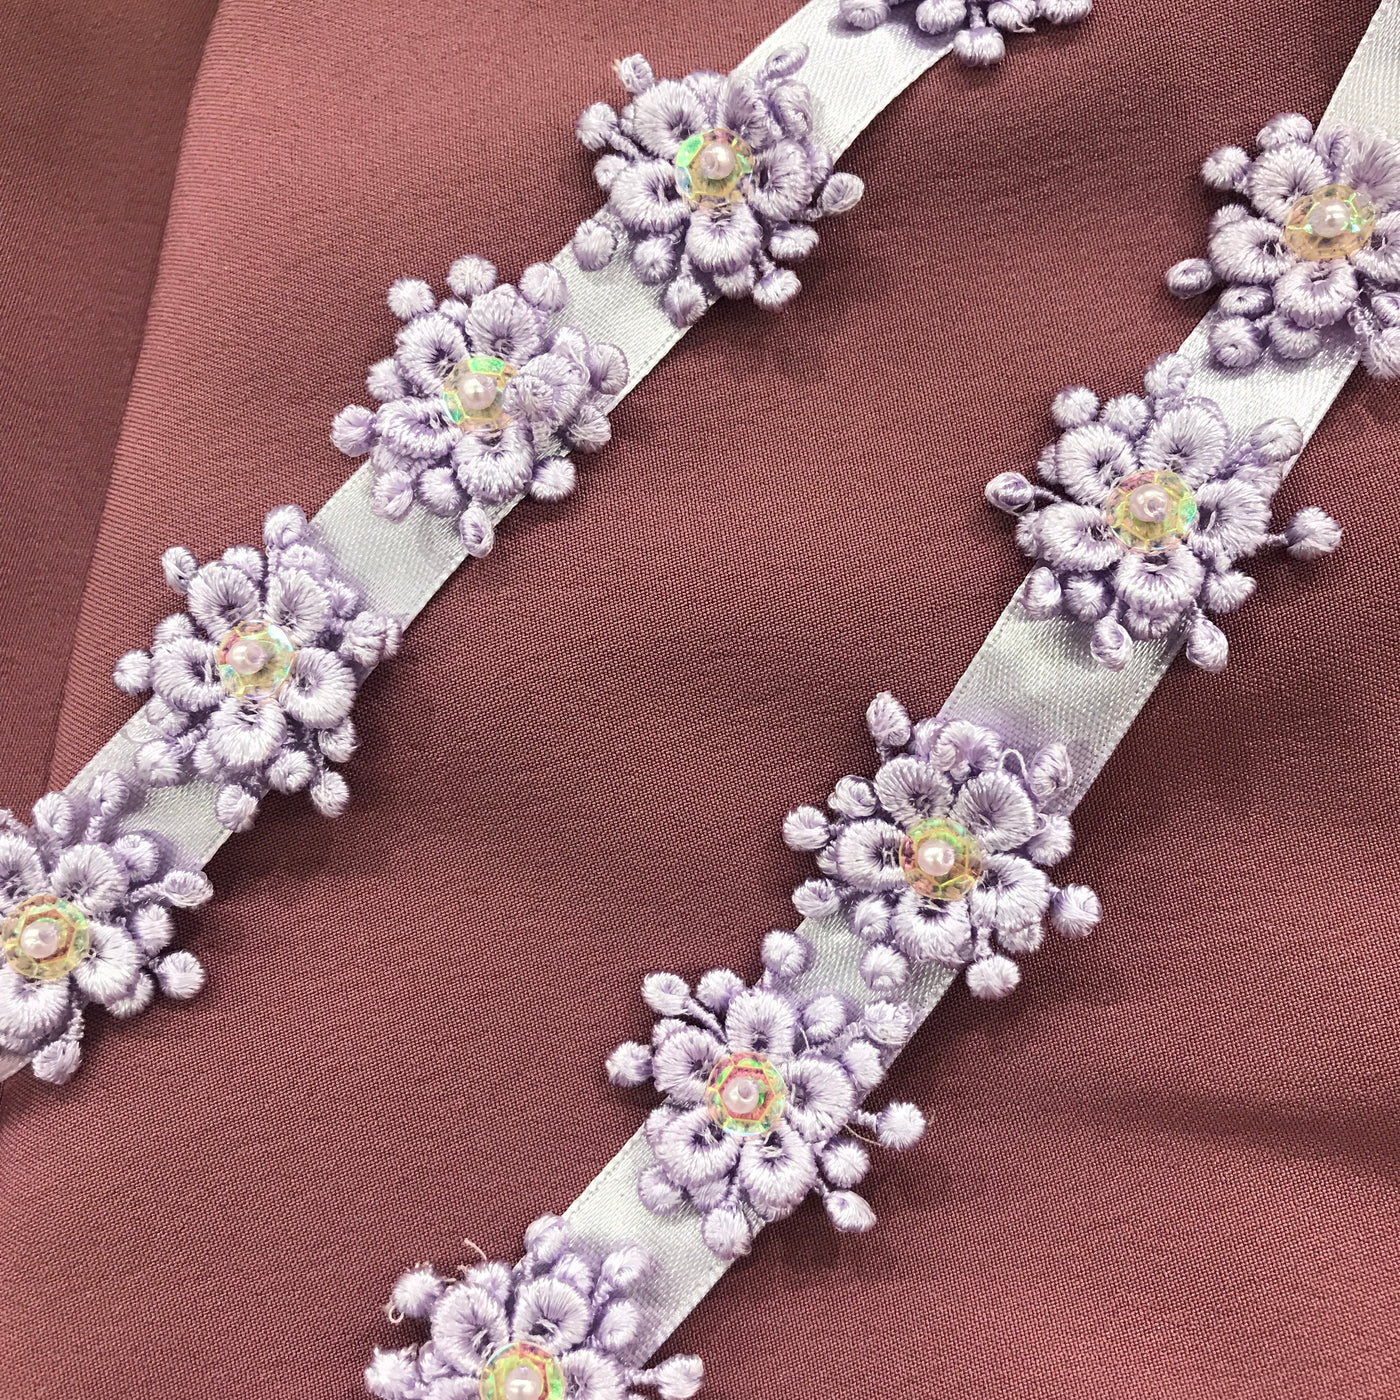 3D Beaded Flower motif on Ribbon Trim Lilac Lace Usa